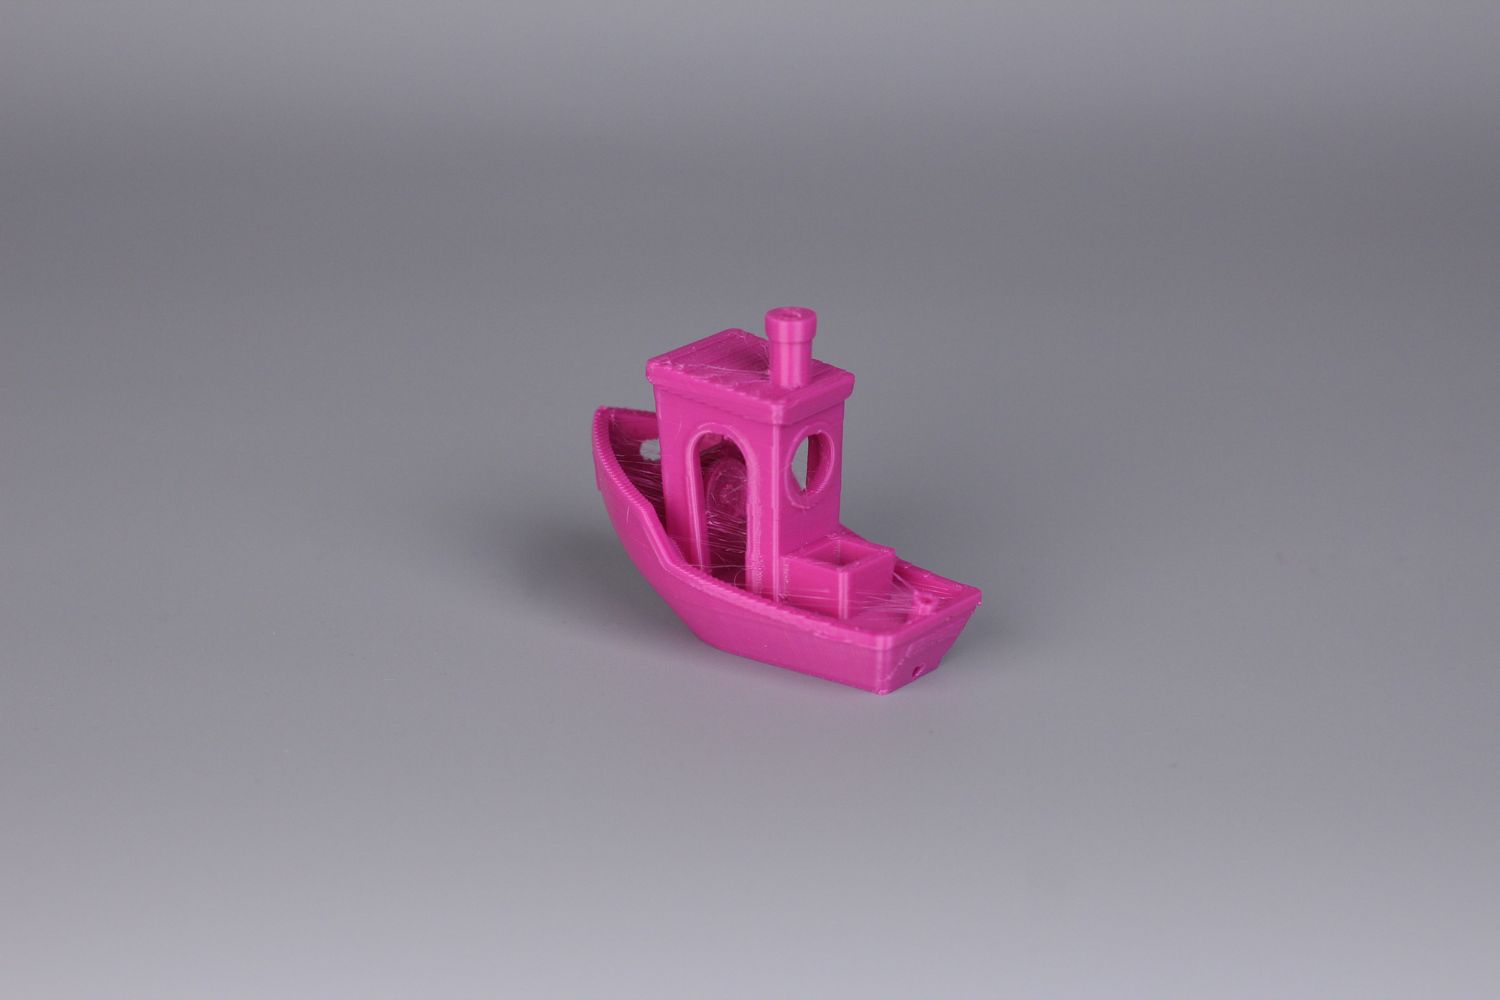 3D Benchy printed on Biqu HURAKAN4 | BIQU Hurakan Review: Klipper Firmware on a Budget